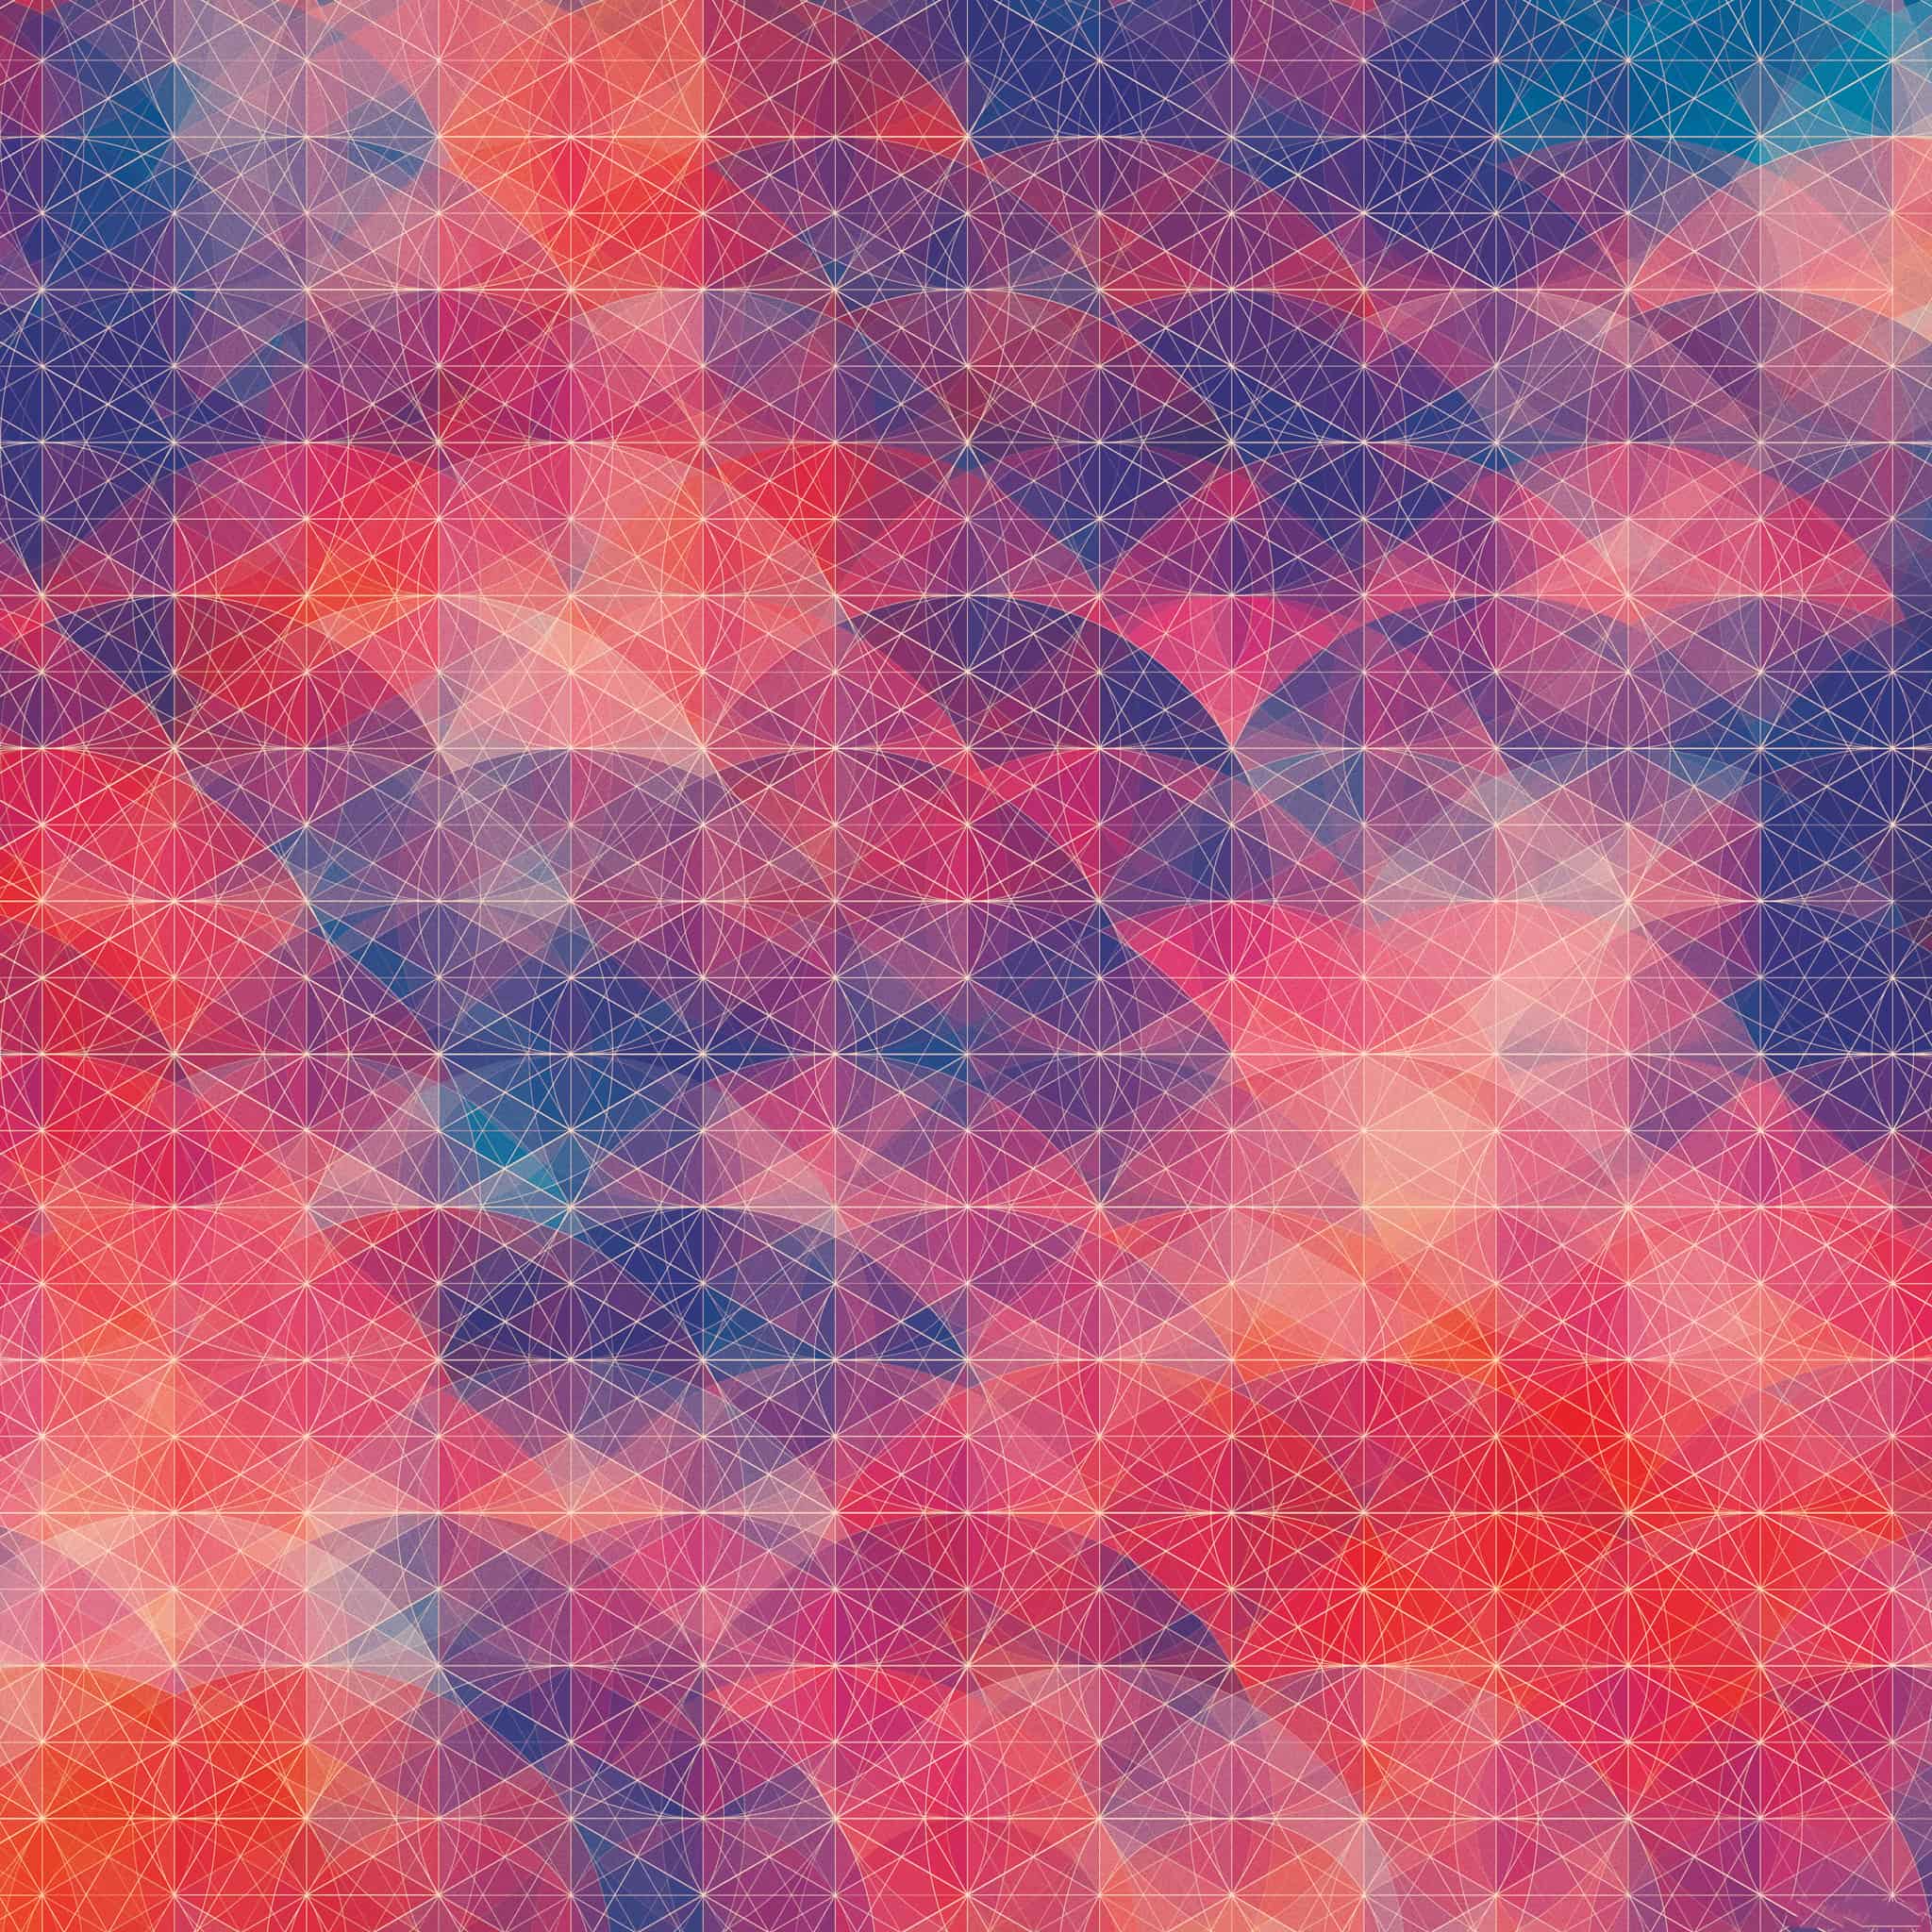 ipad pro stock wallpapers,pattern,orange,red,pink,purple